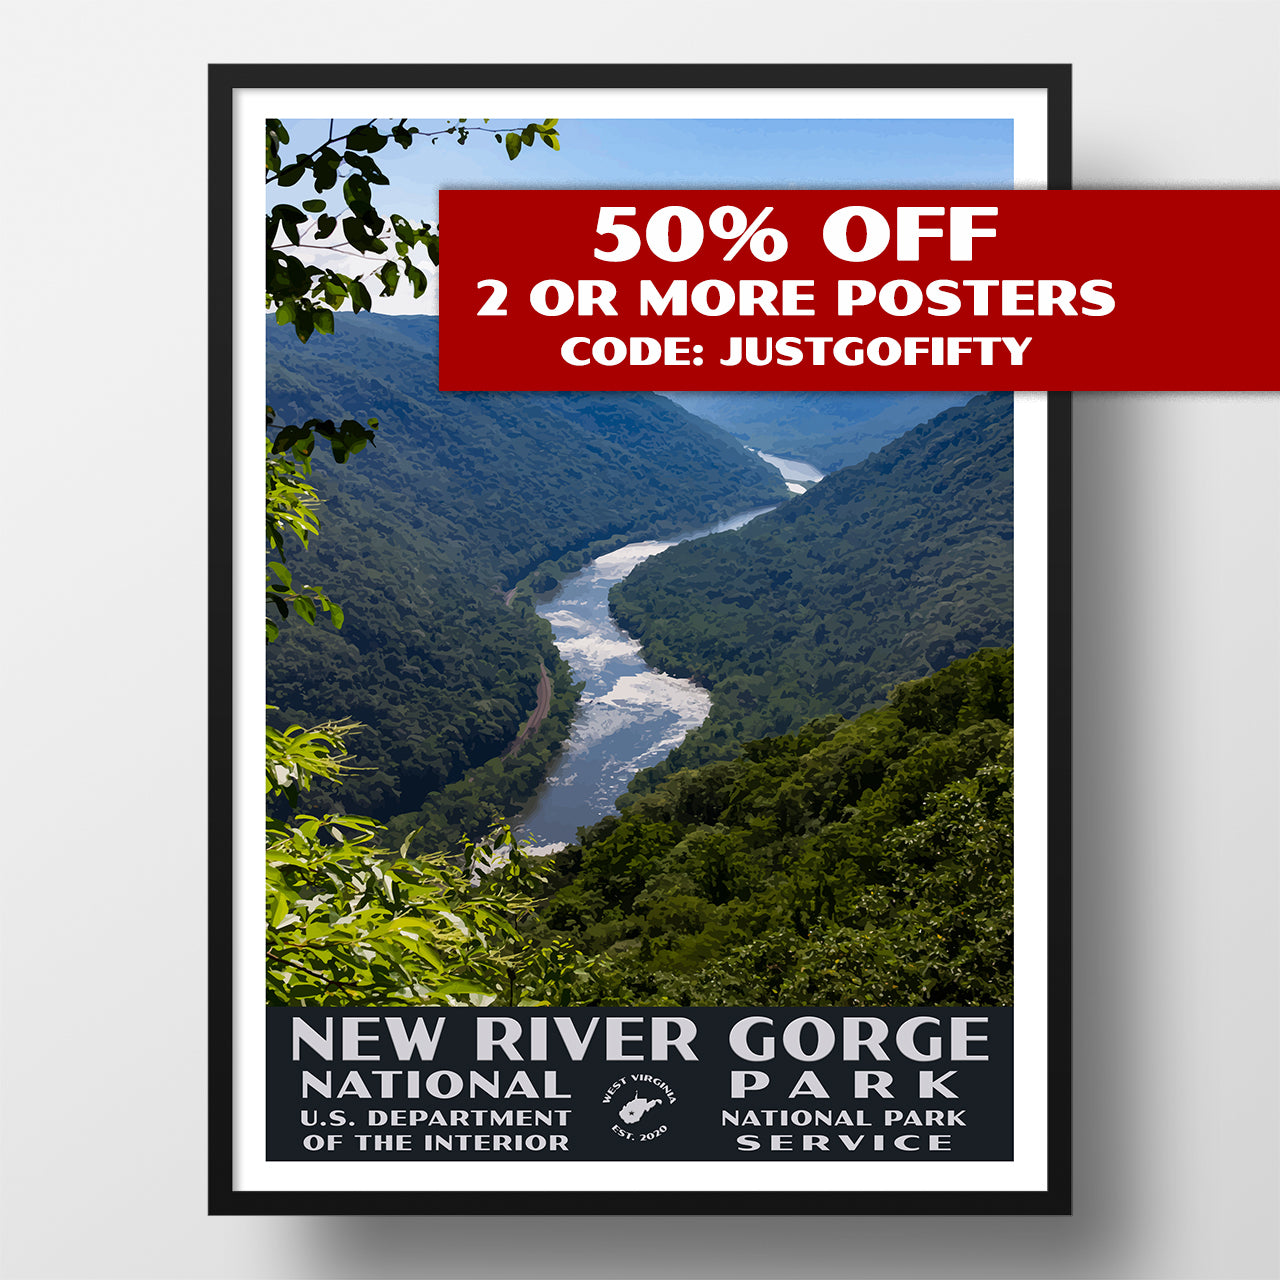 New River Gorge National Park poster